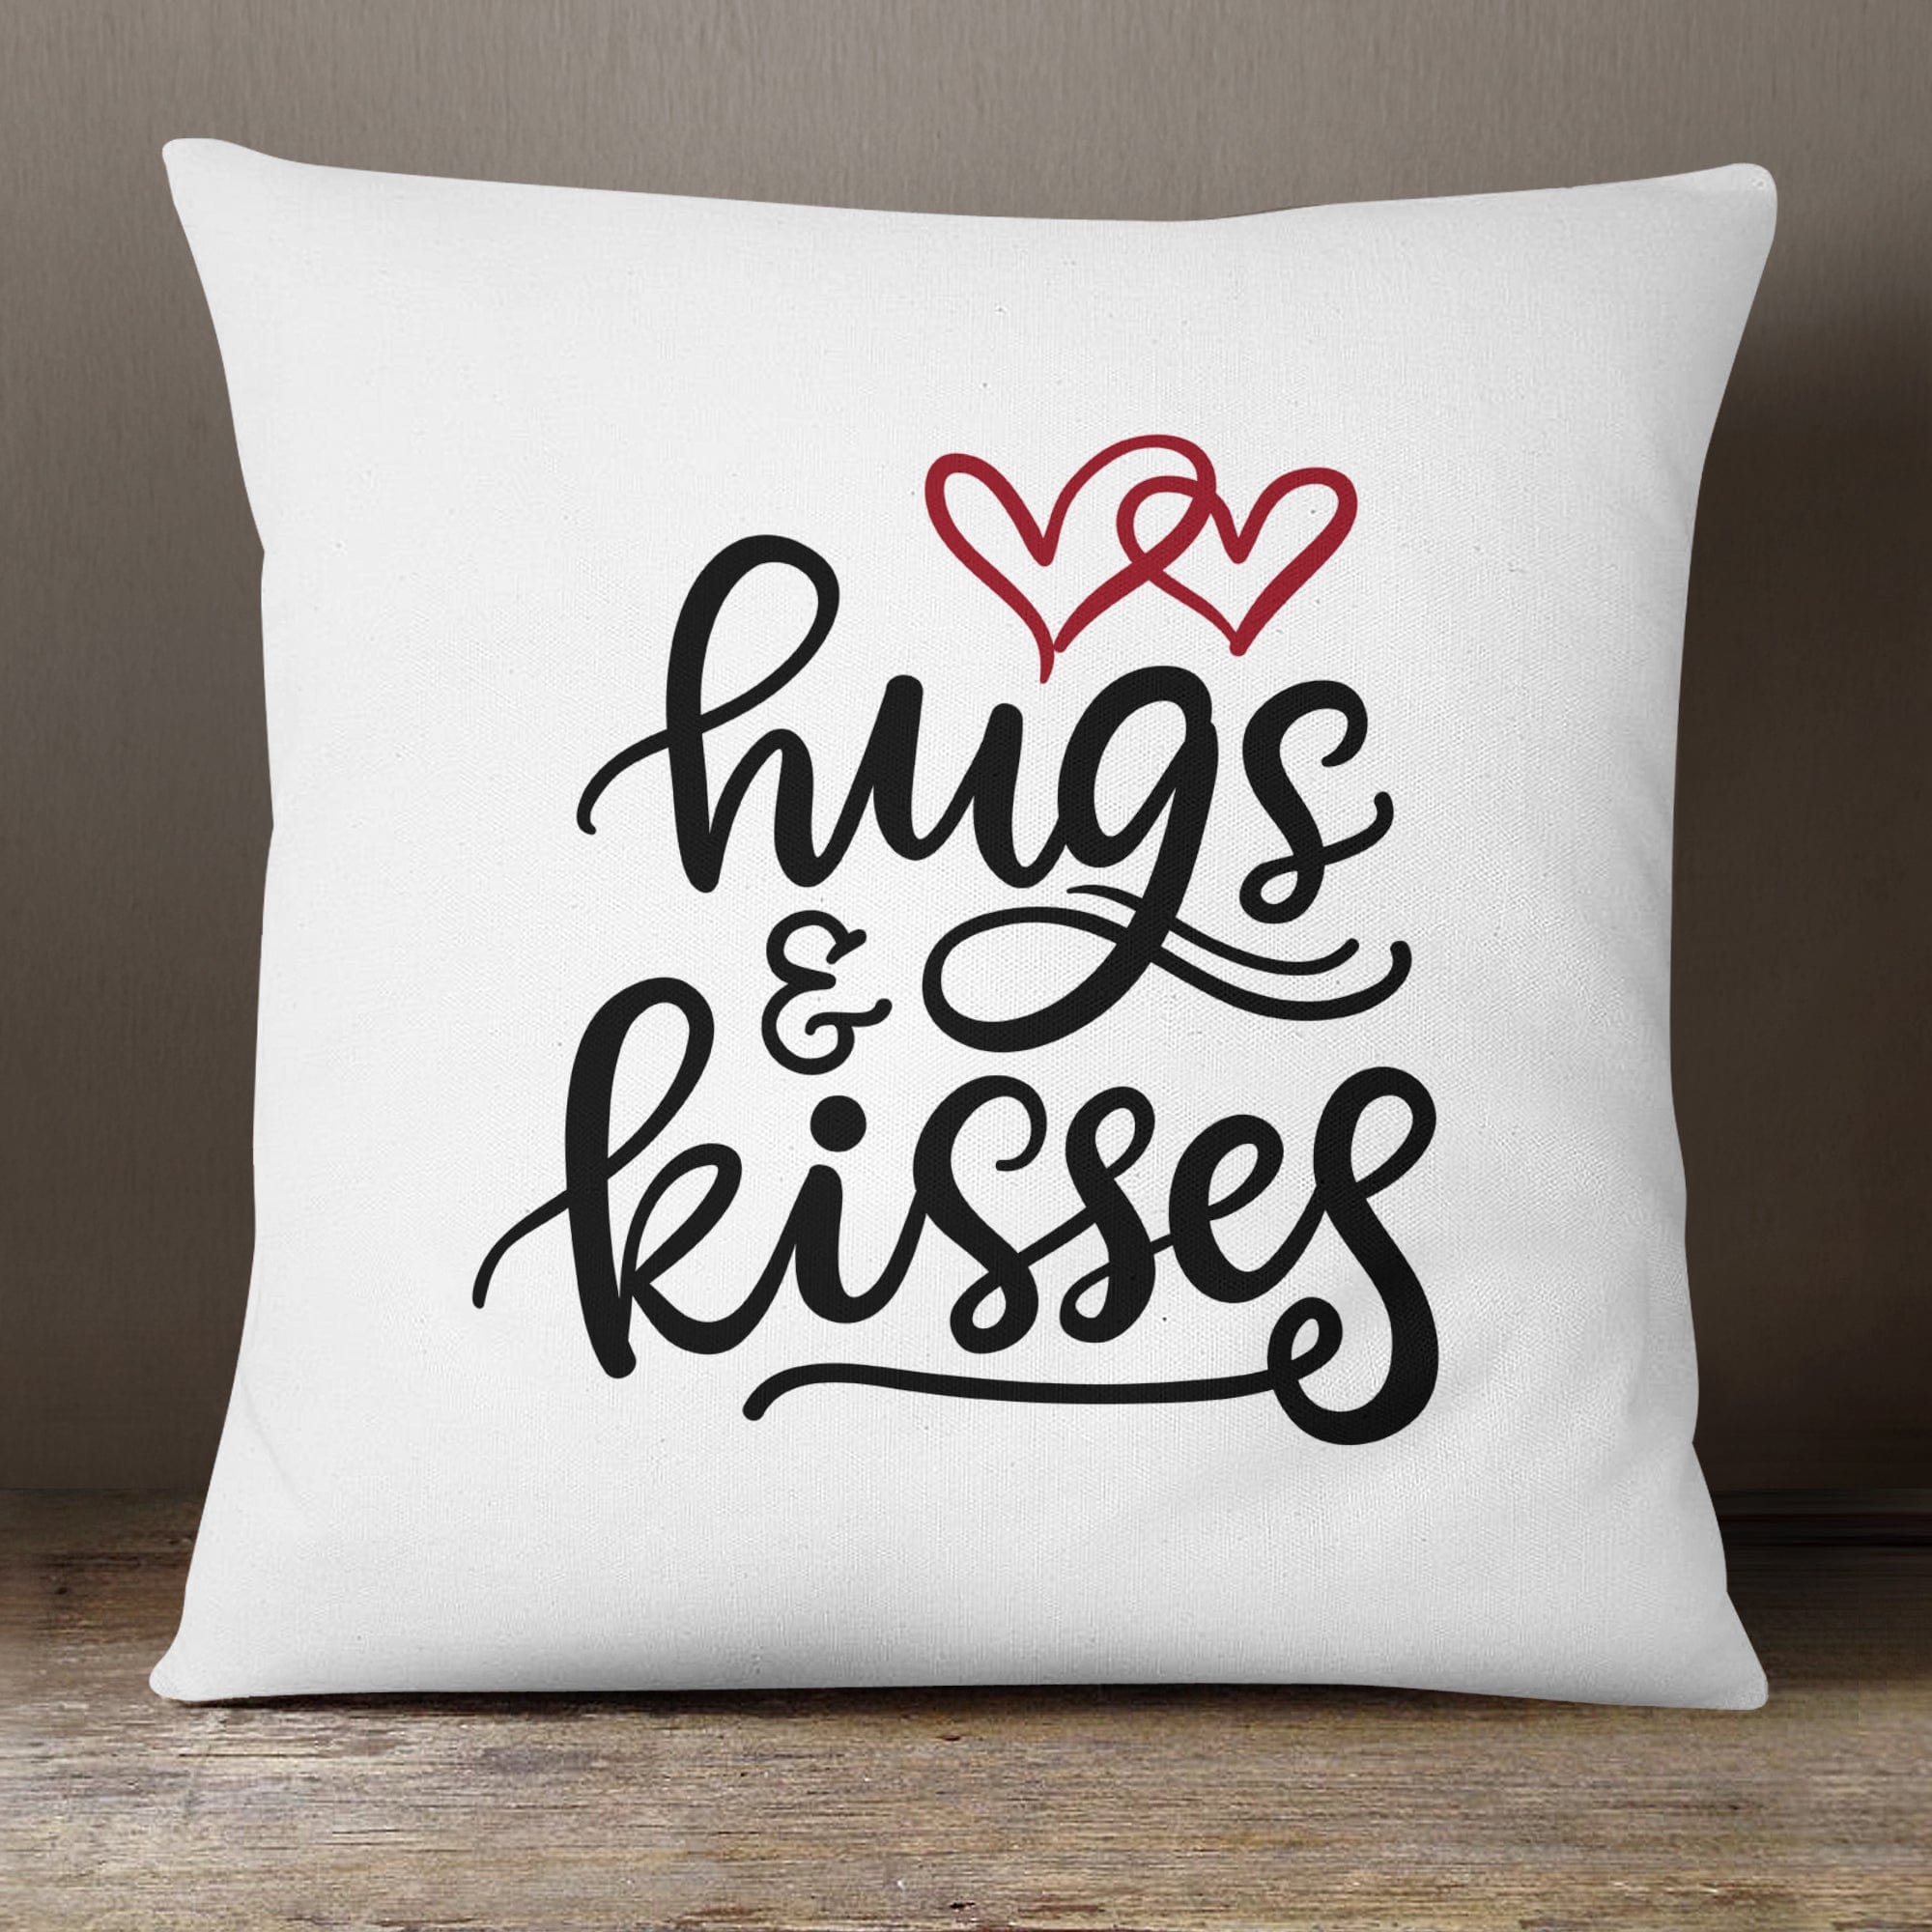 Red Throw Pillow Cases Festive Polylester Linen Kisses Hugs One